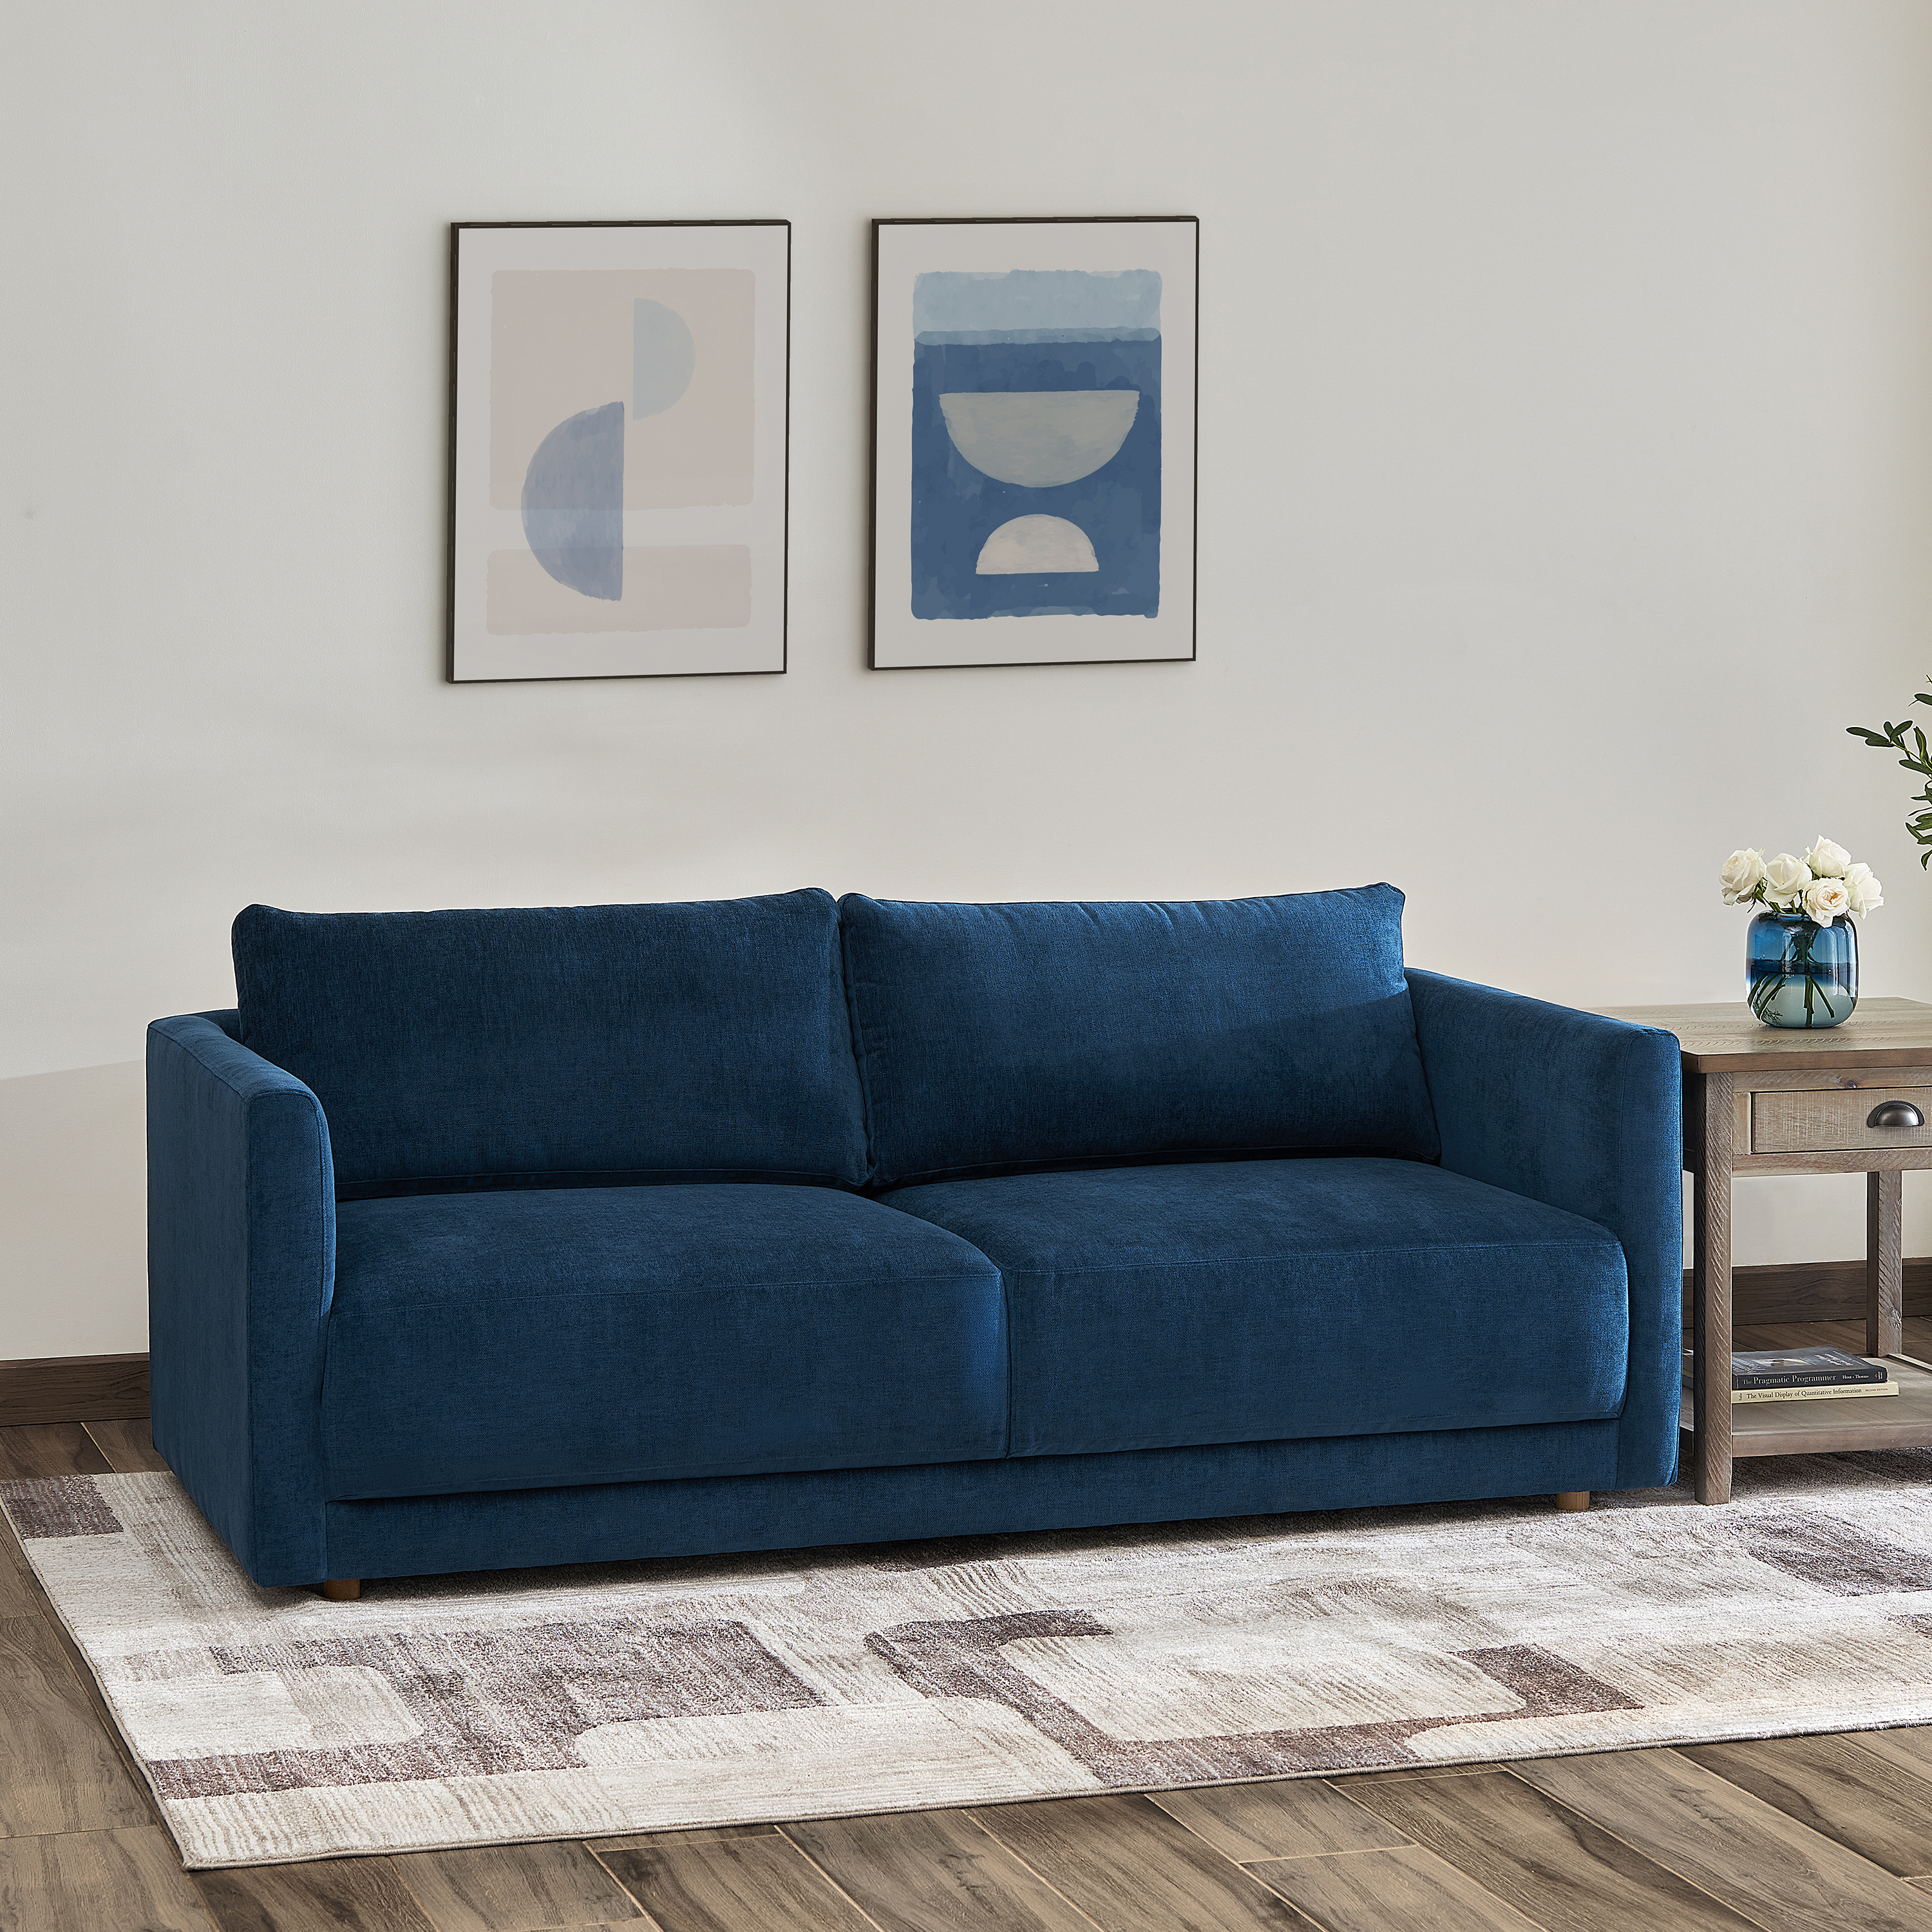 VIFAH SIGNATURE Italian Quality Mid-Century Design 76-inch Sofa with Back Cushions